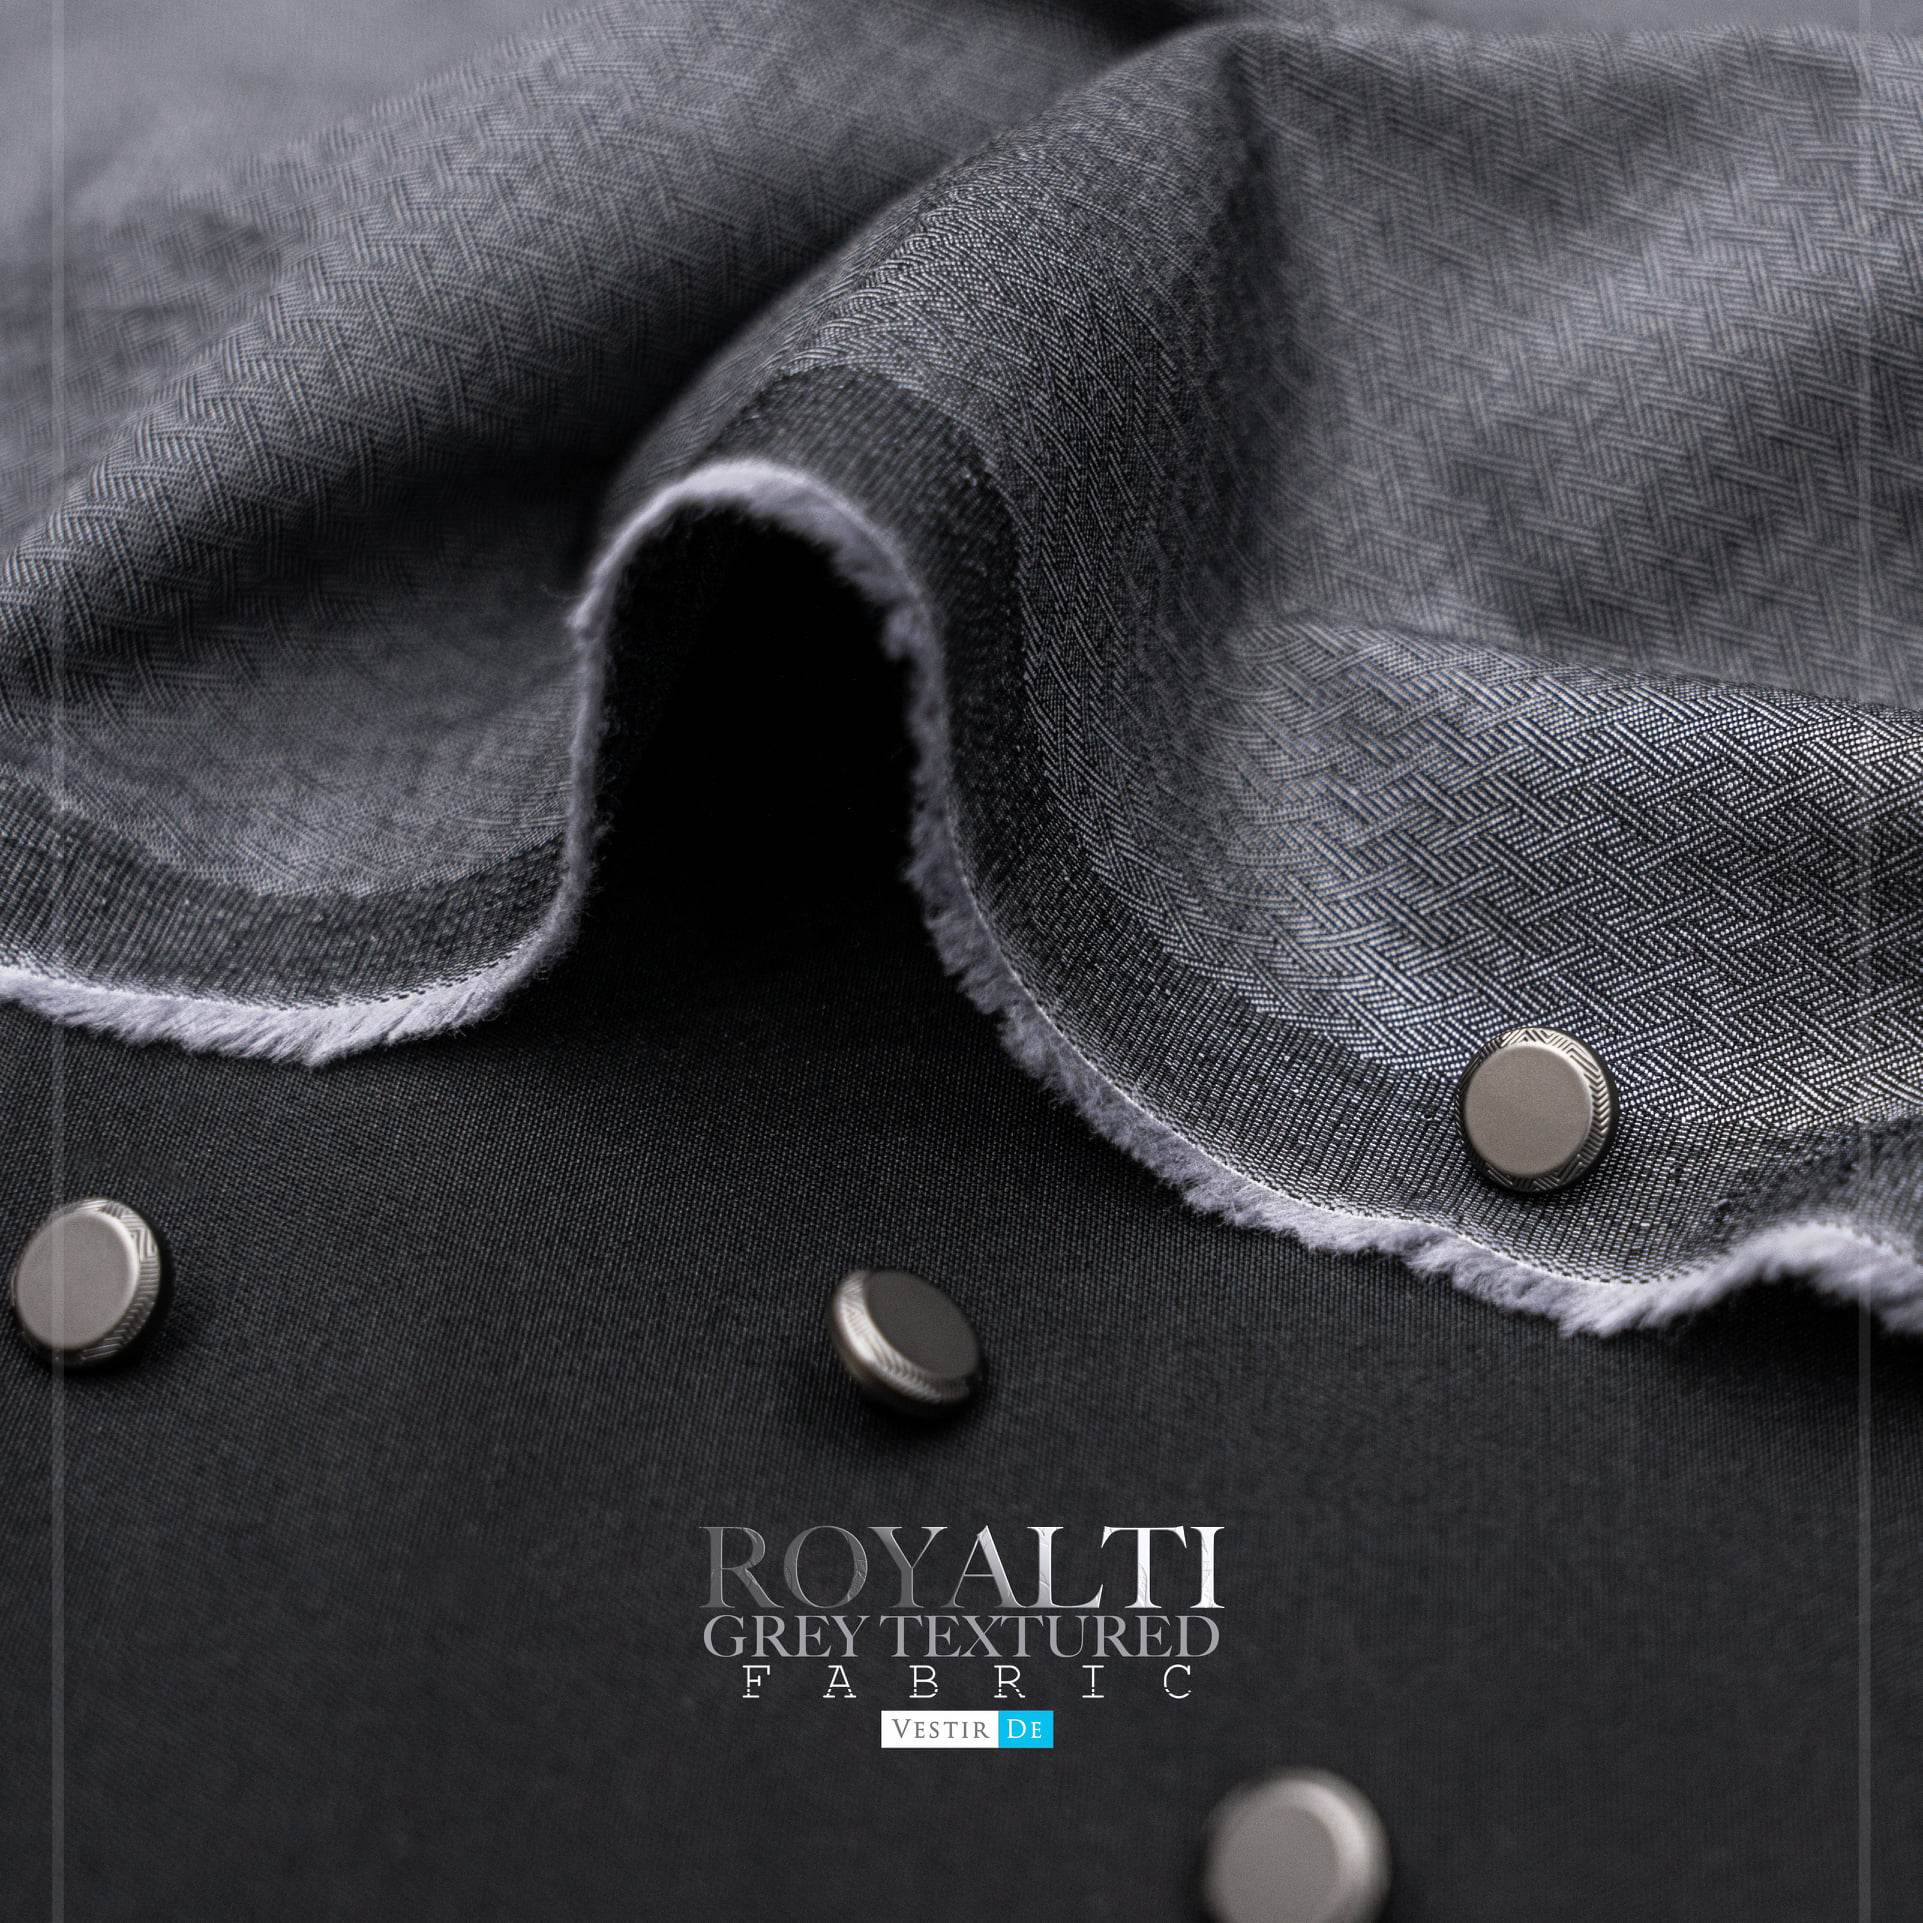 Royalti Grey Textured